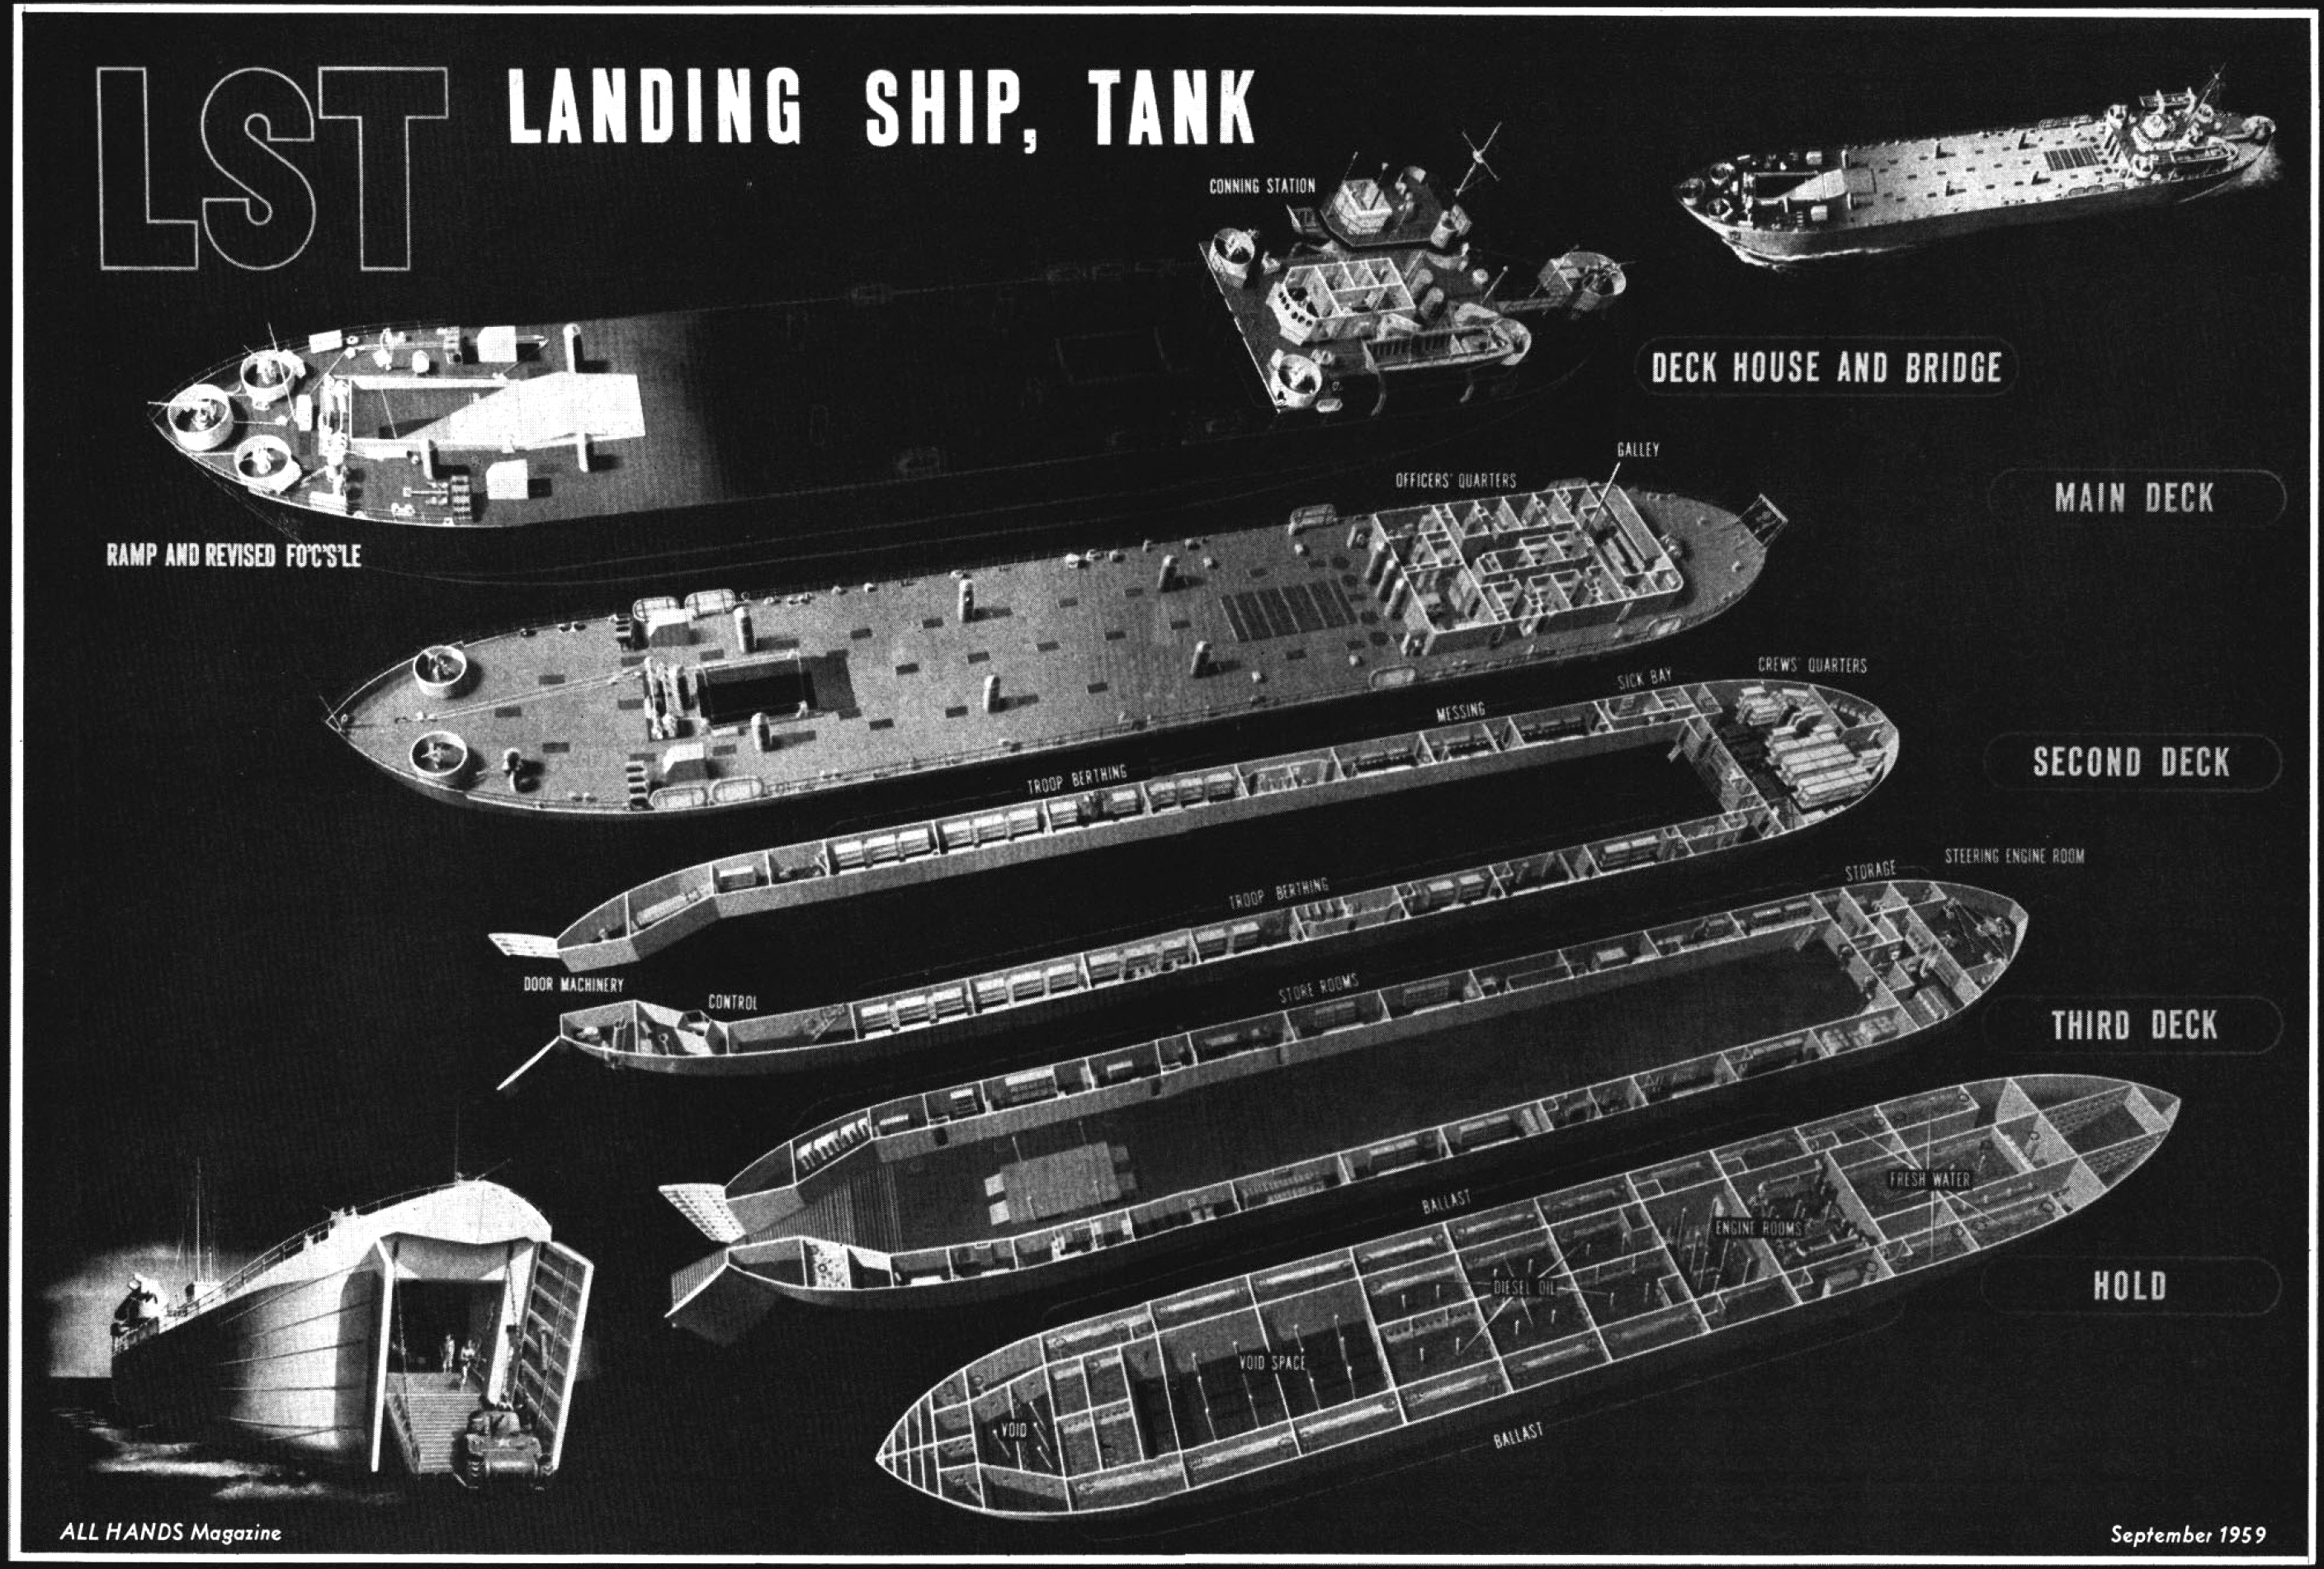 Tank_landing_ship_technical_diagram_1959.png